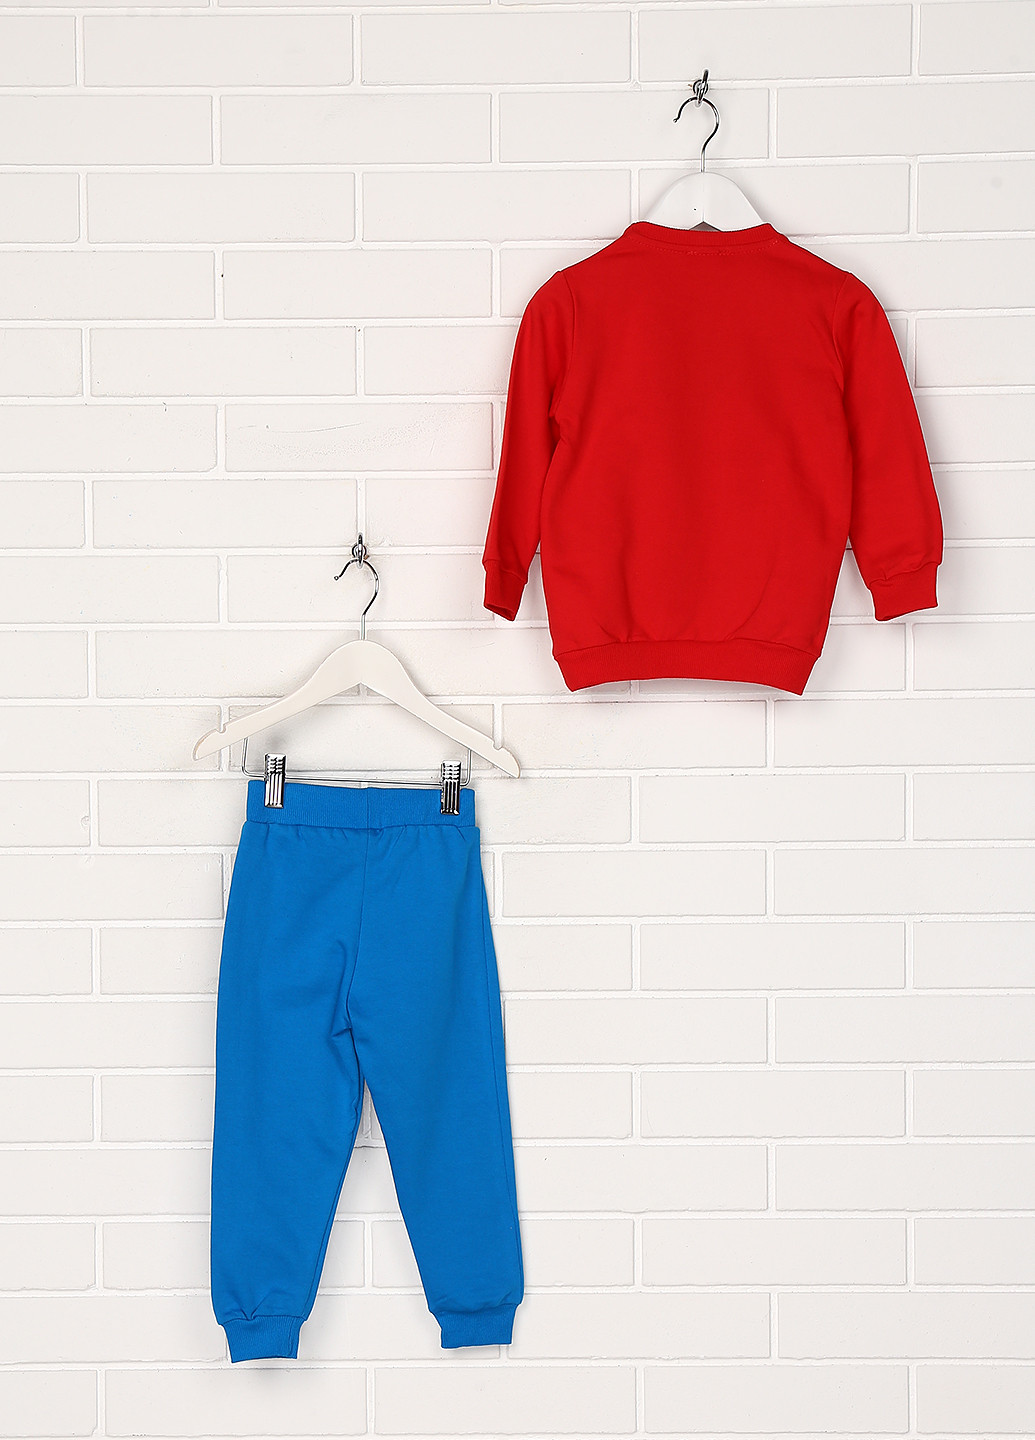 Красный демисезонный комплект (свитшот, брюки) Paty Kids